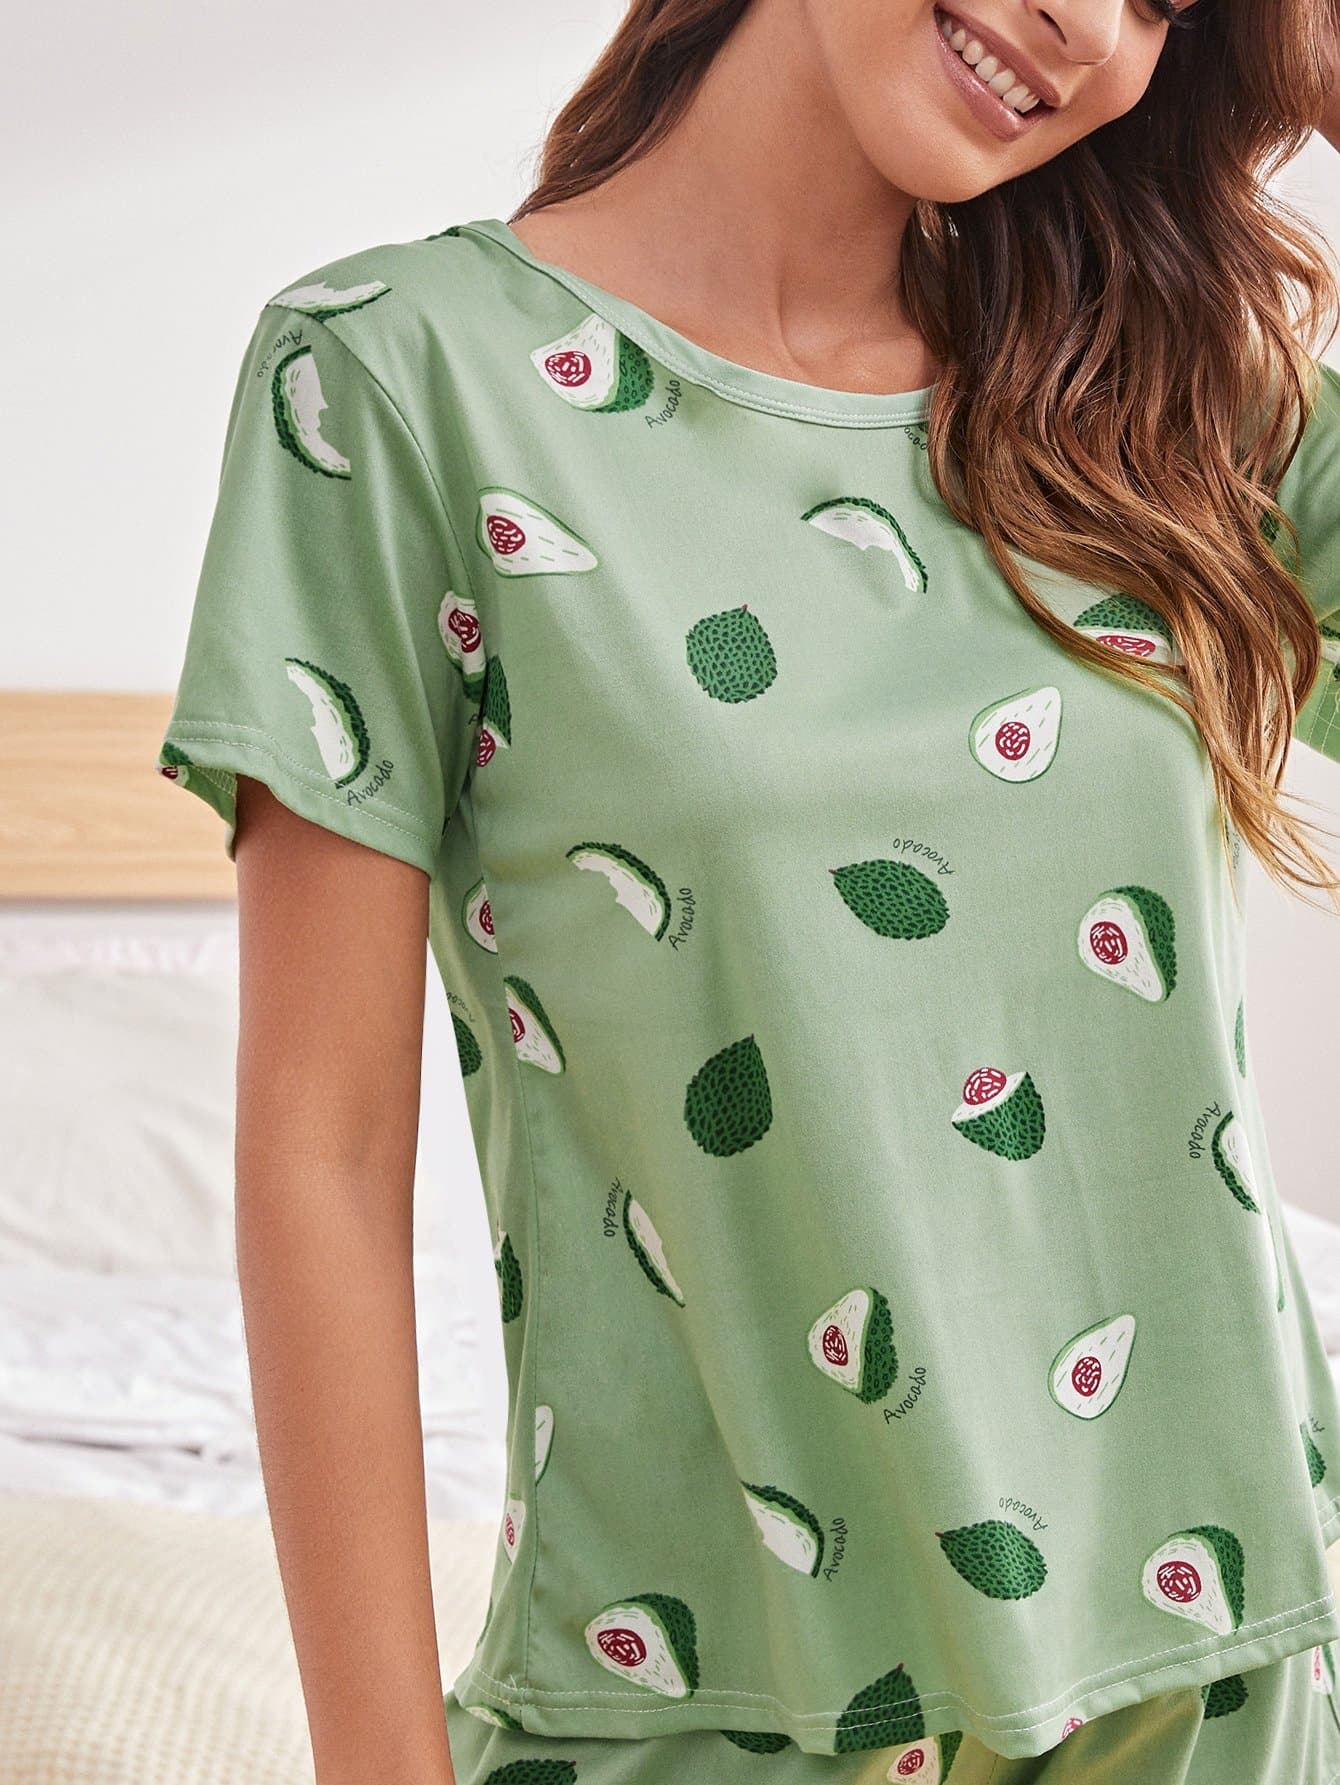 Green Round Neck Cartoon Avocado And Letter Graphic Pyjama Sleepwear Set